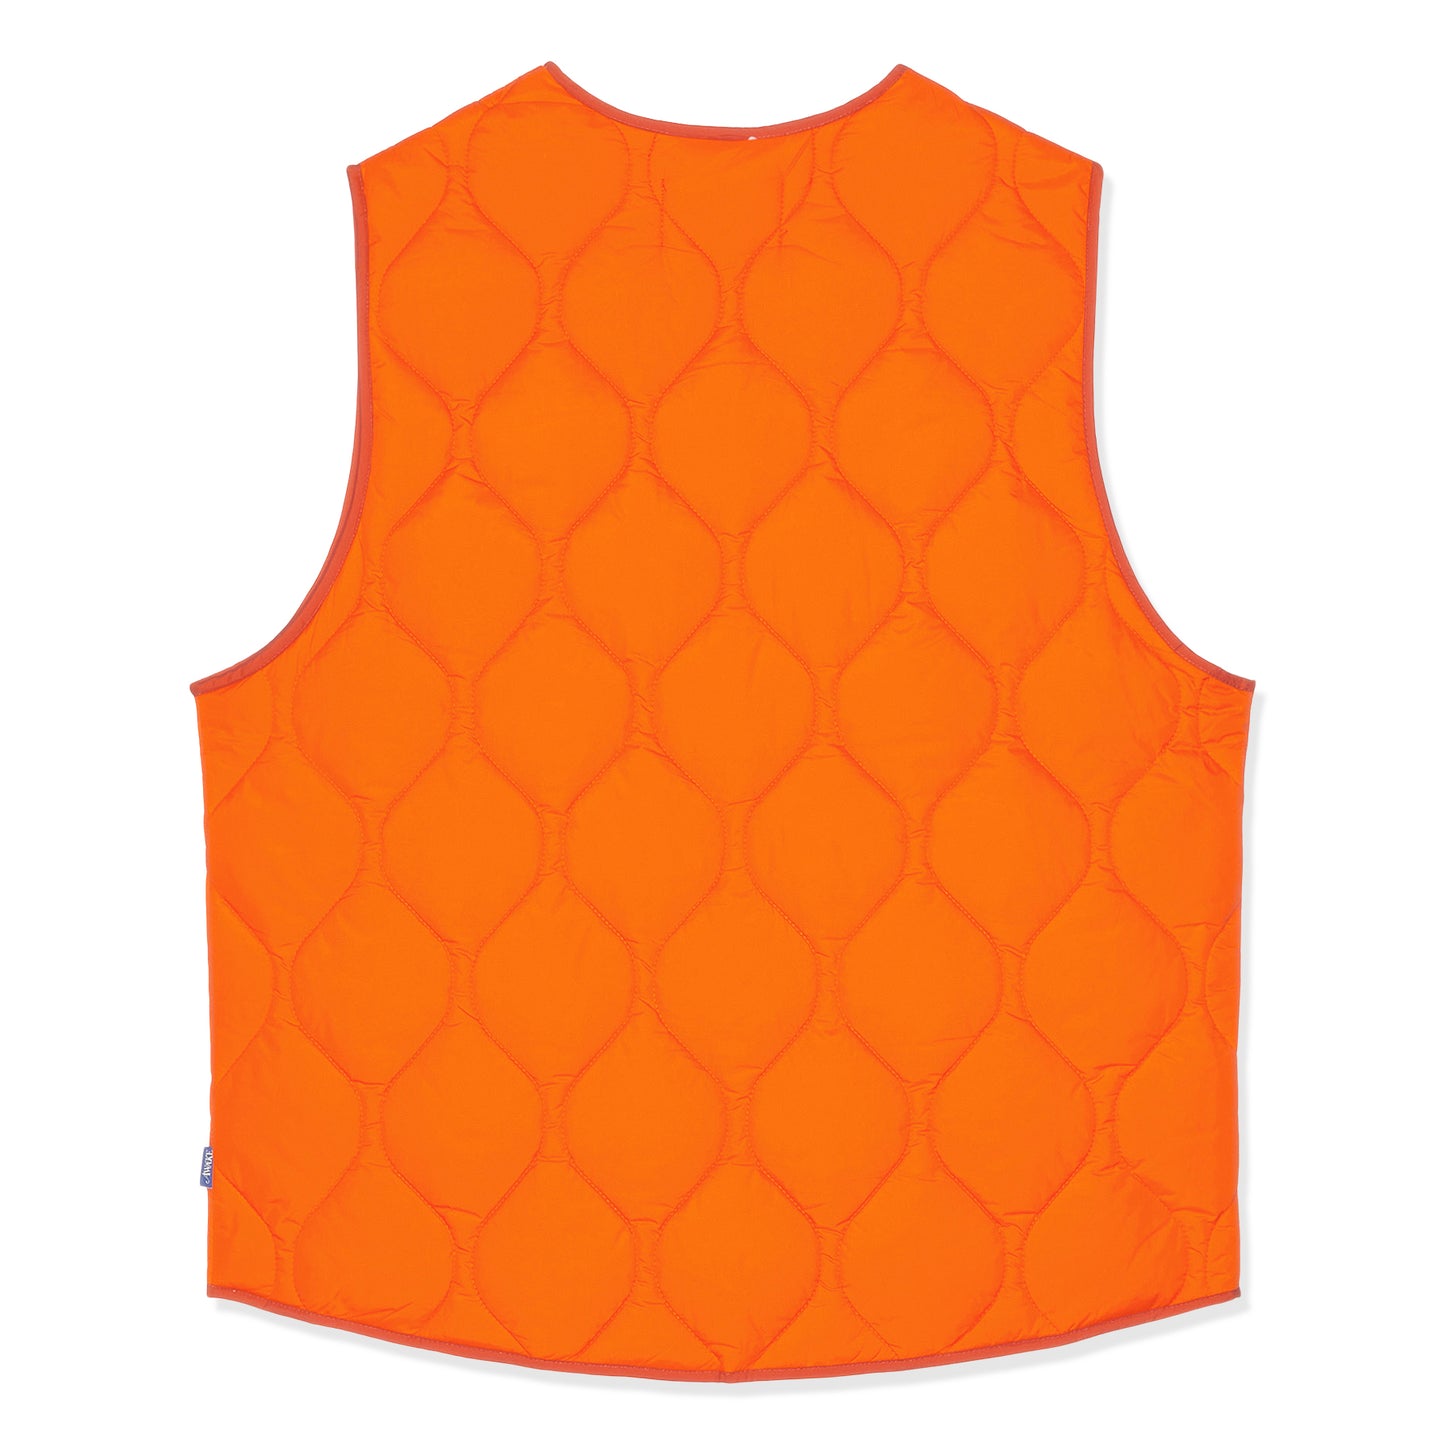 Awake NY Quilted Vest (Orange)